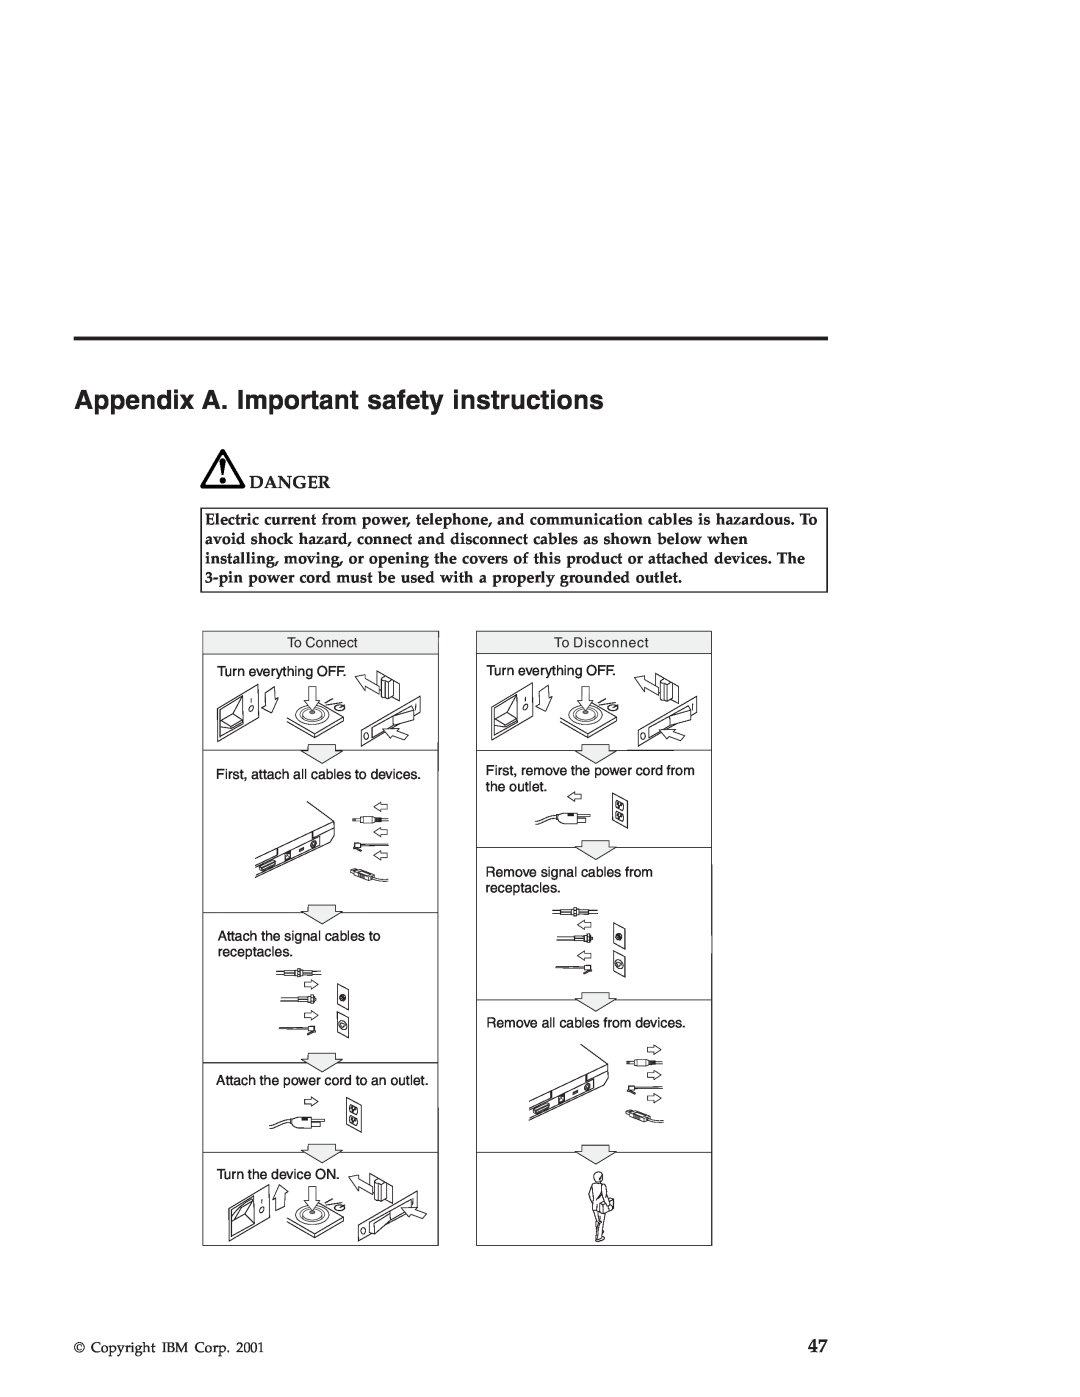 IBM R30 manual Appendix A. Important safety instructions, Danger 